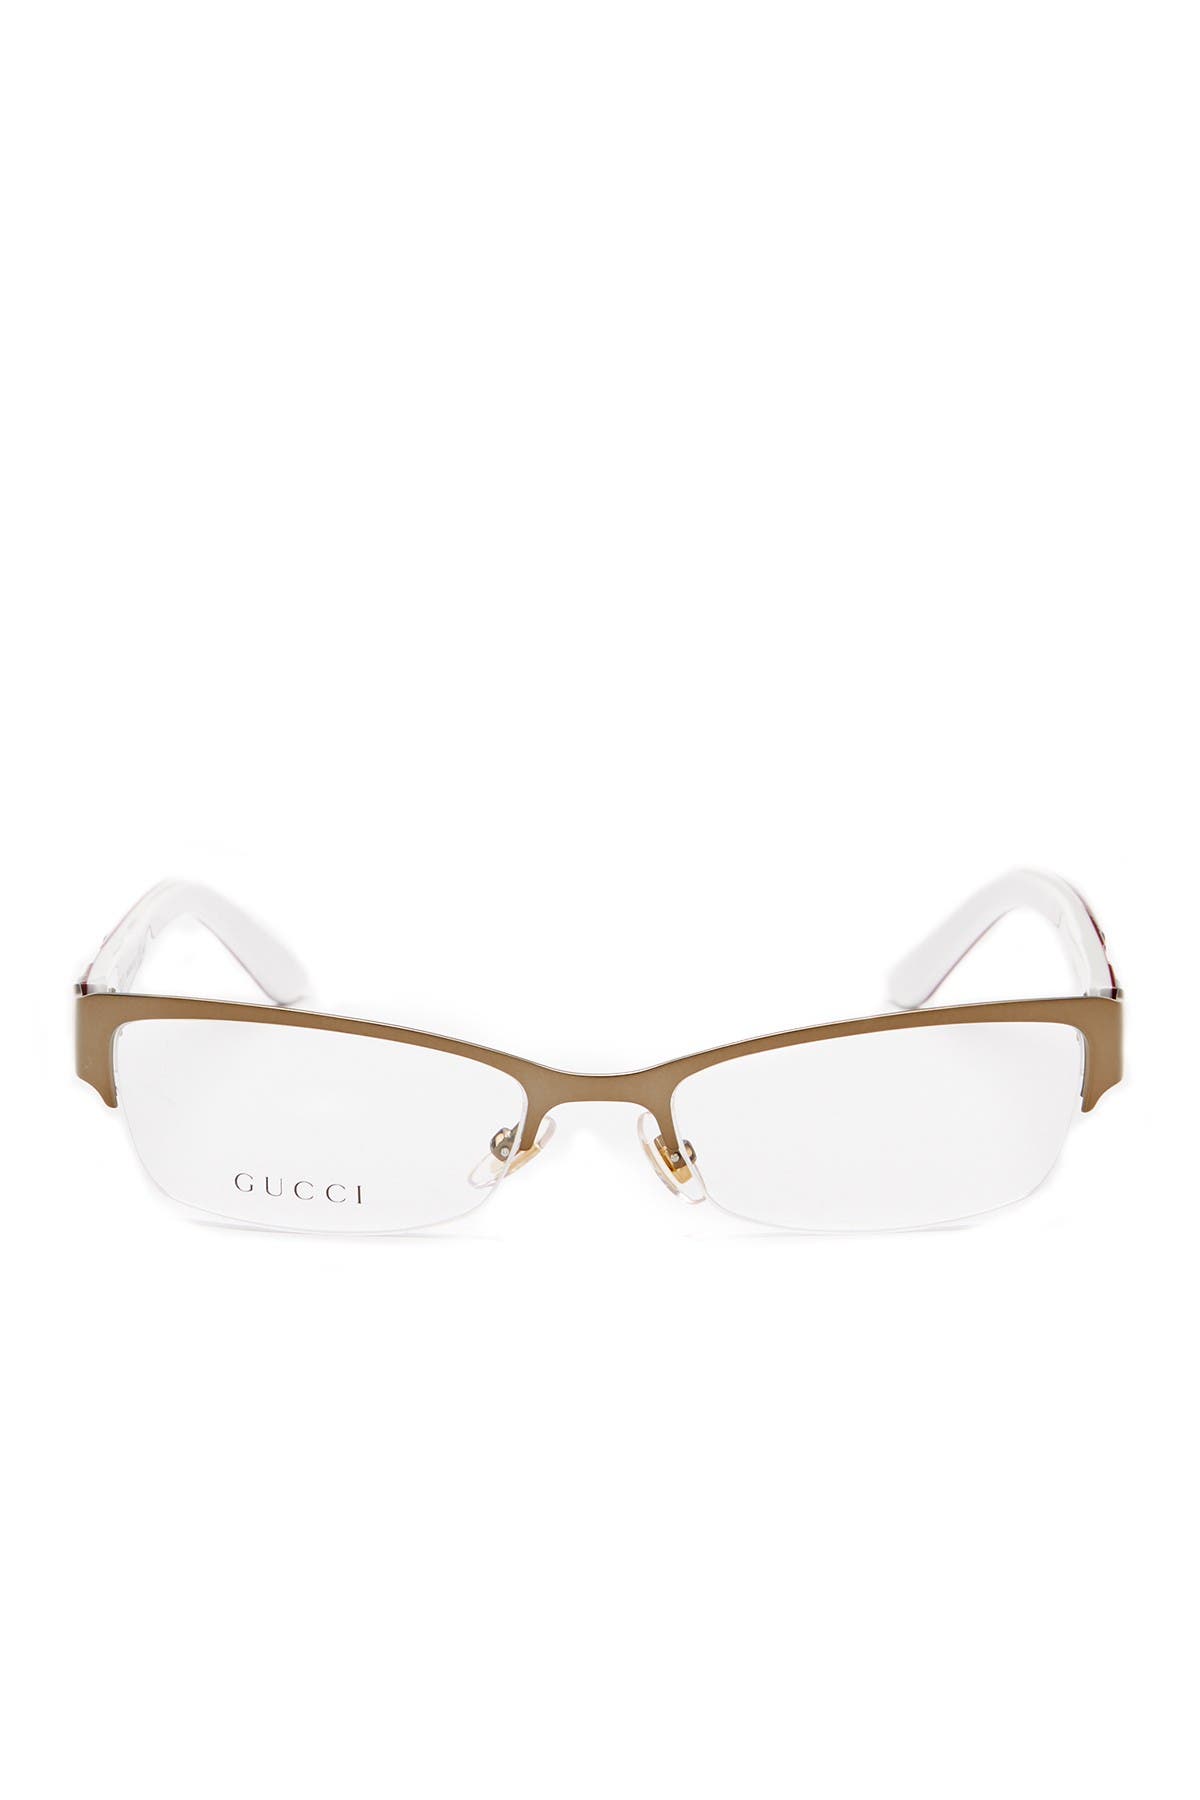 gucci semi rimless eyeglasses